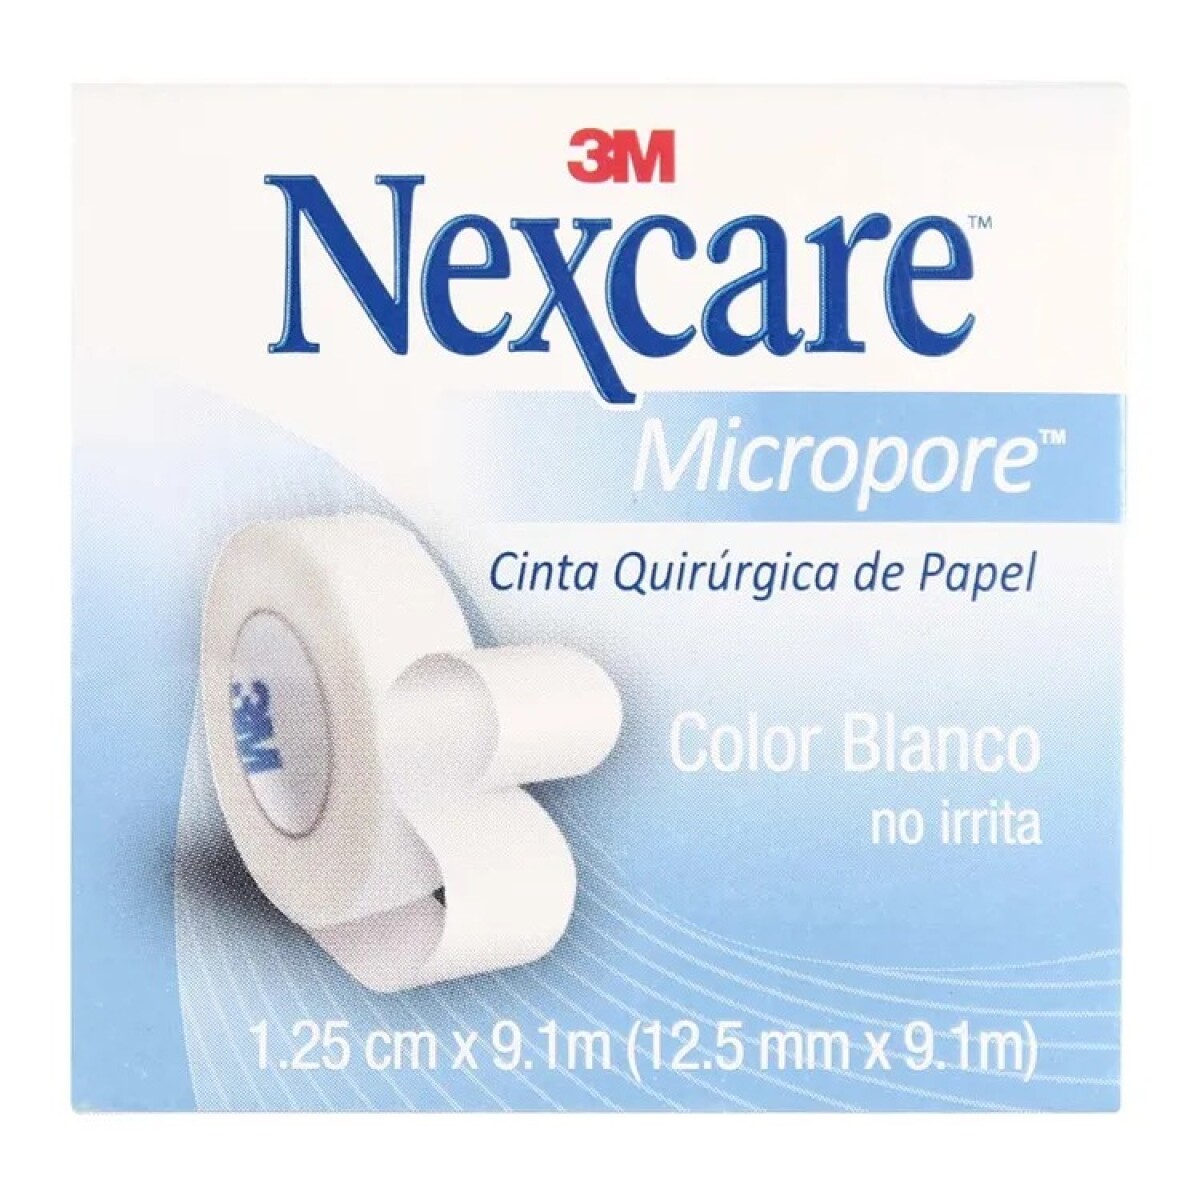 Nexcare Micropore 1,25 Cm. X 9.1 Mts. 